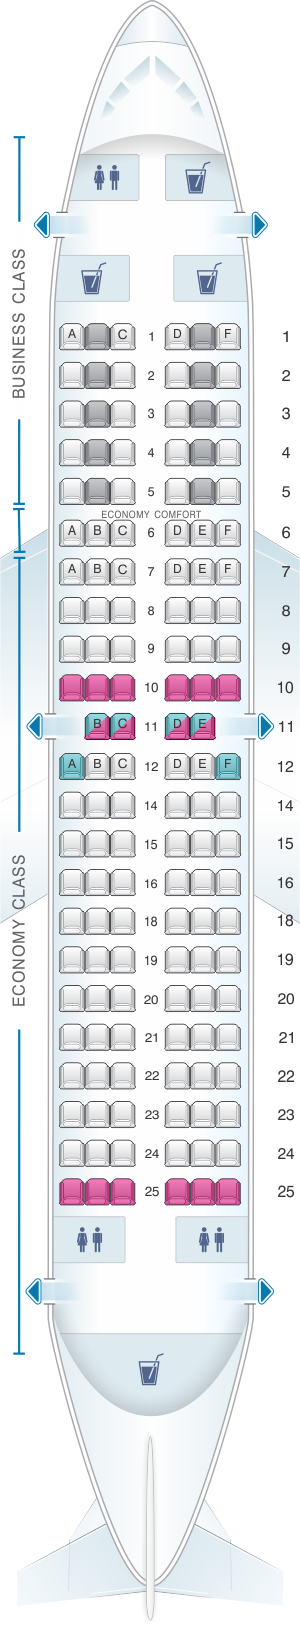 Klm Seating Chart